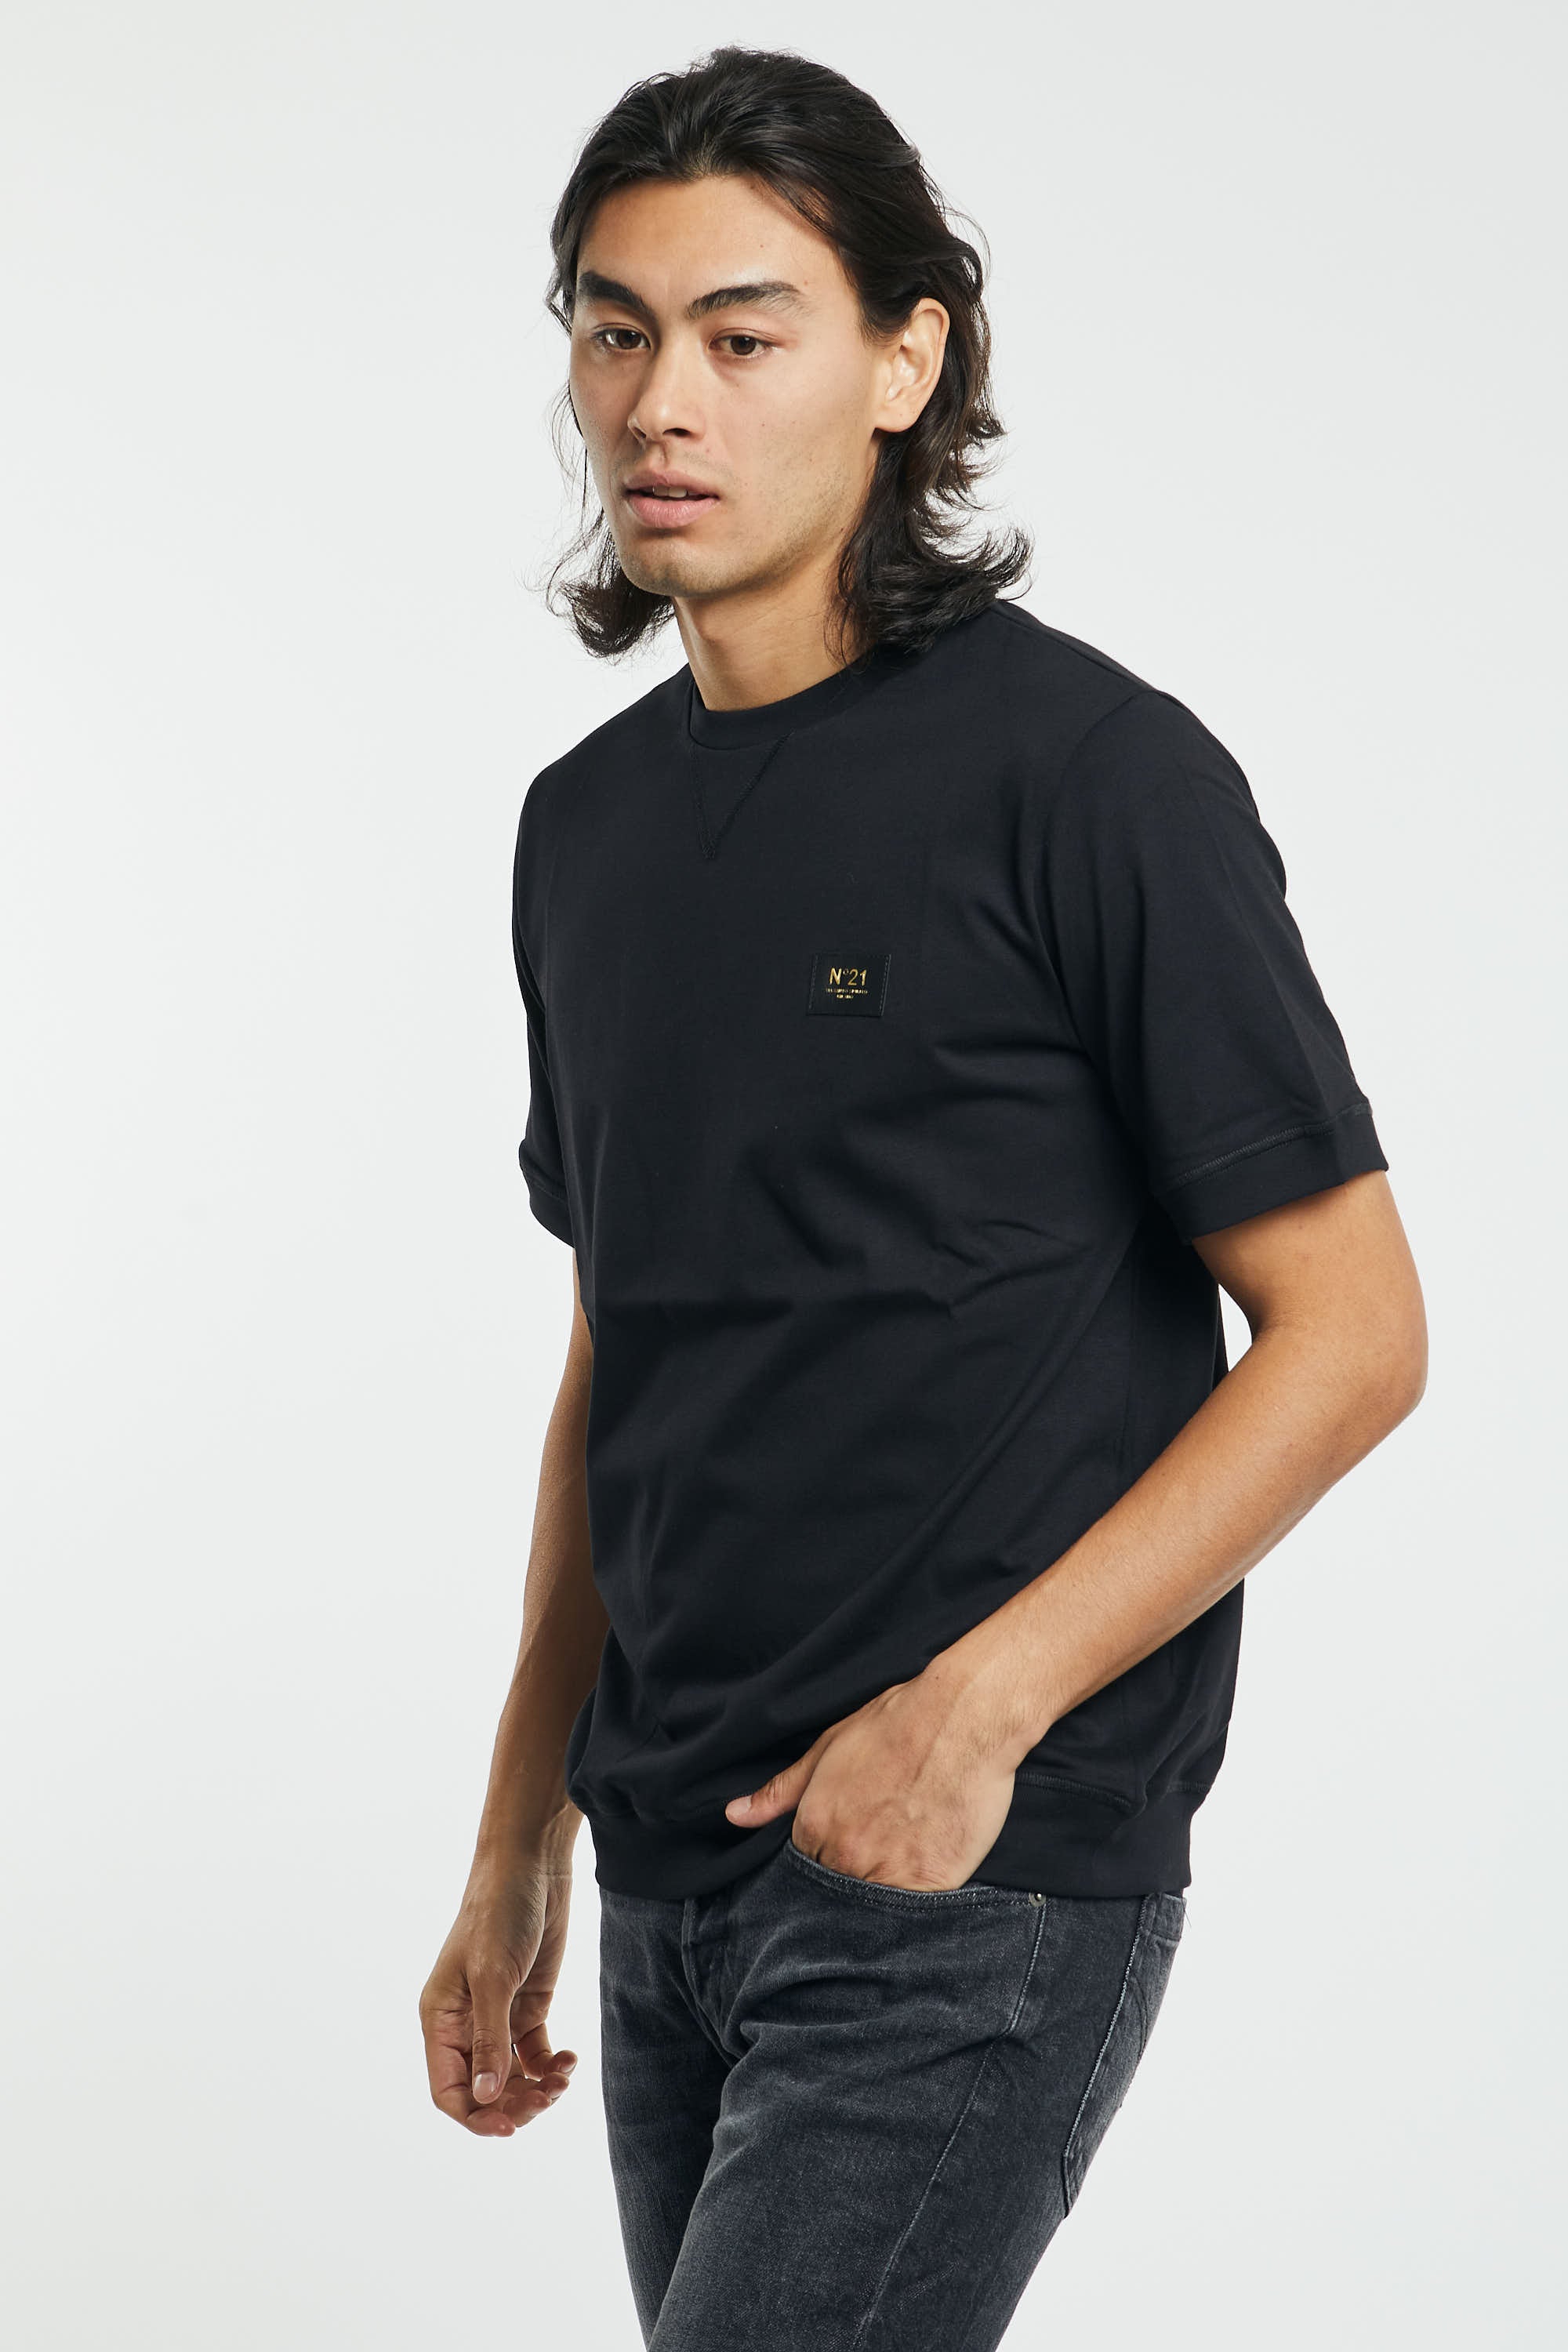 N°21 Cotton/Eco-leather T-Shirt Black - 3